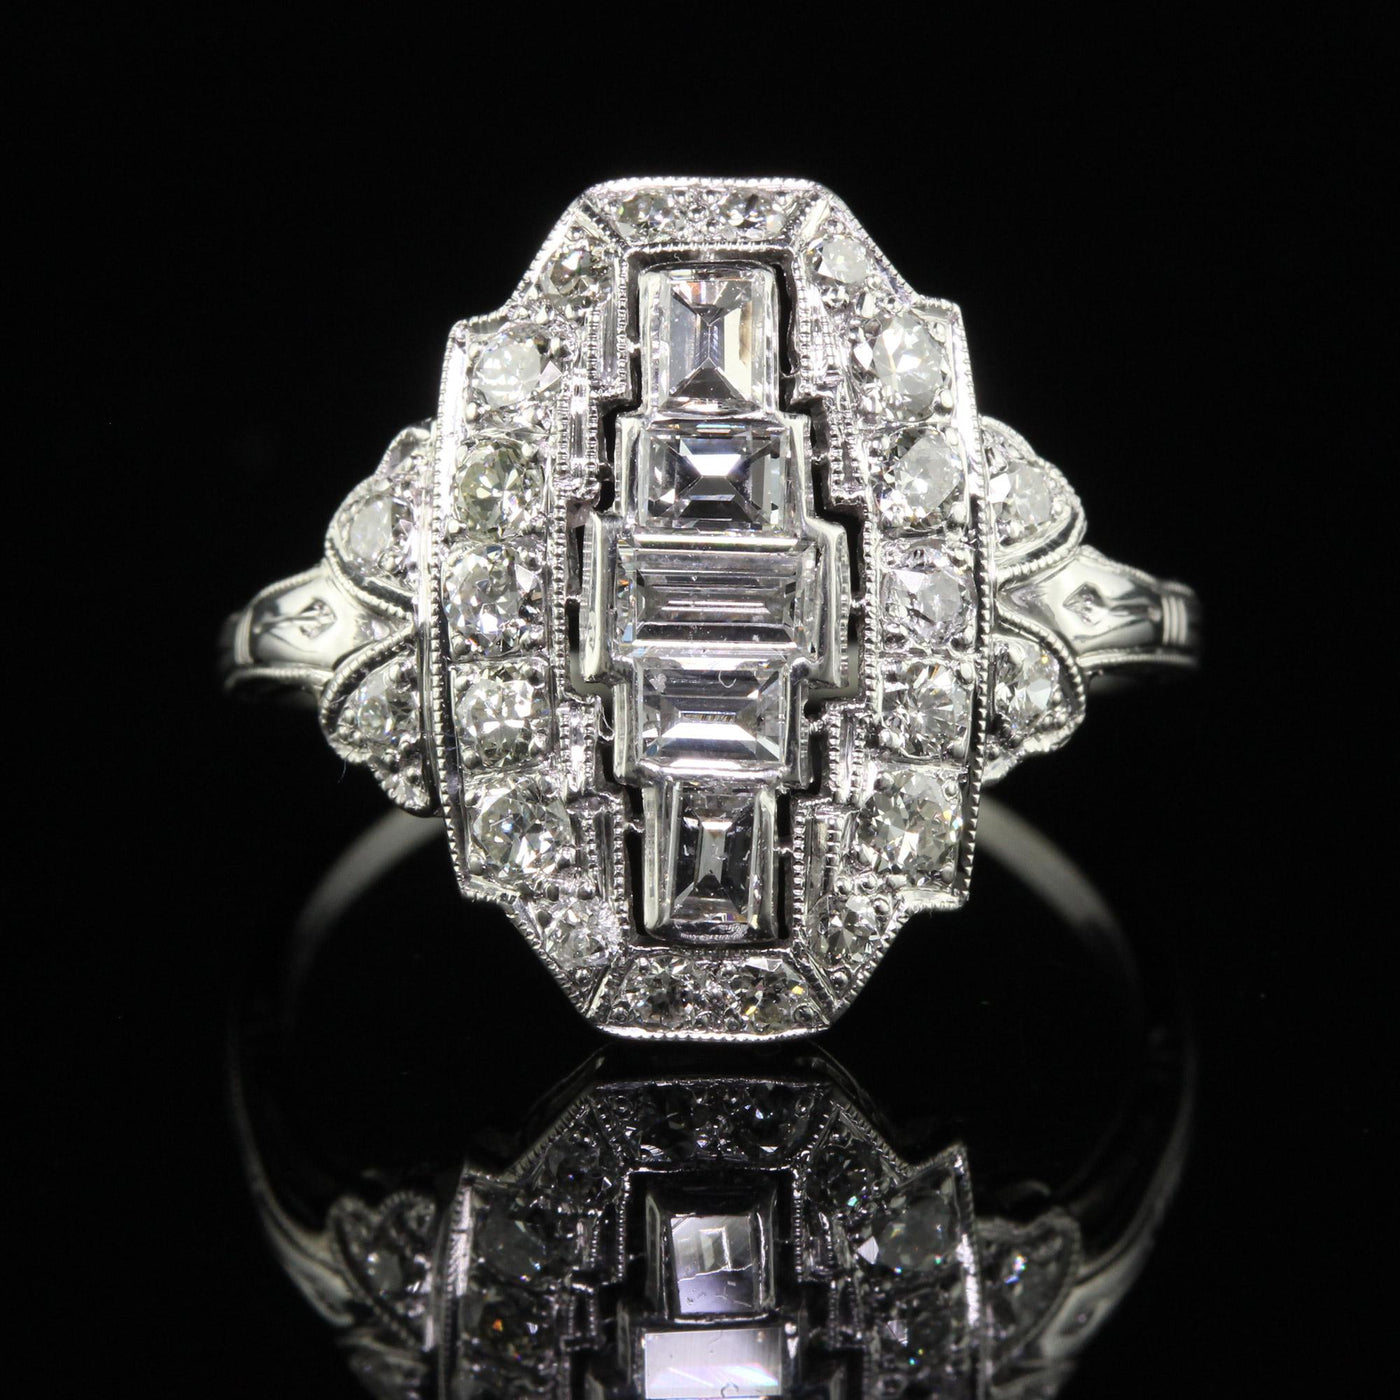 Antique Art Deco Platinum Old Cut Baguette Euro Diamond Shield Ring